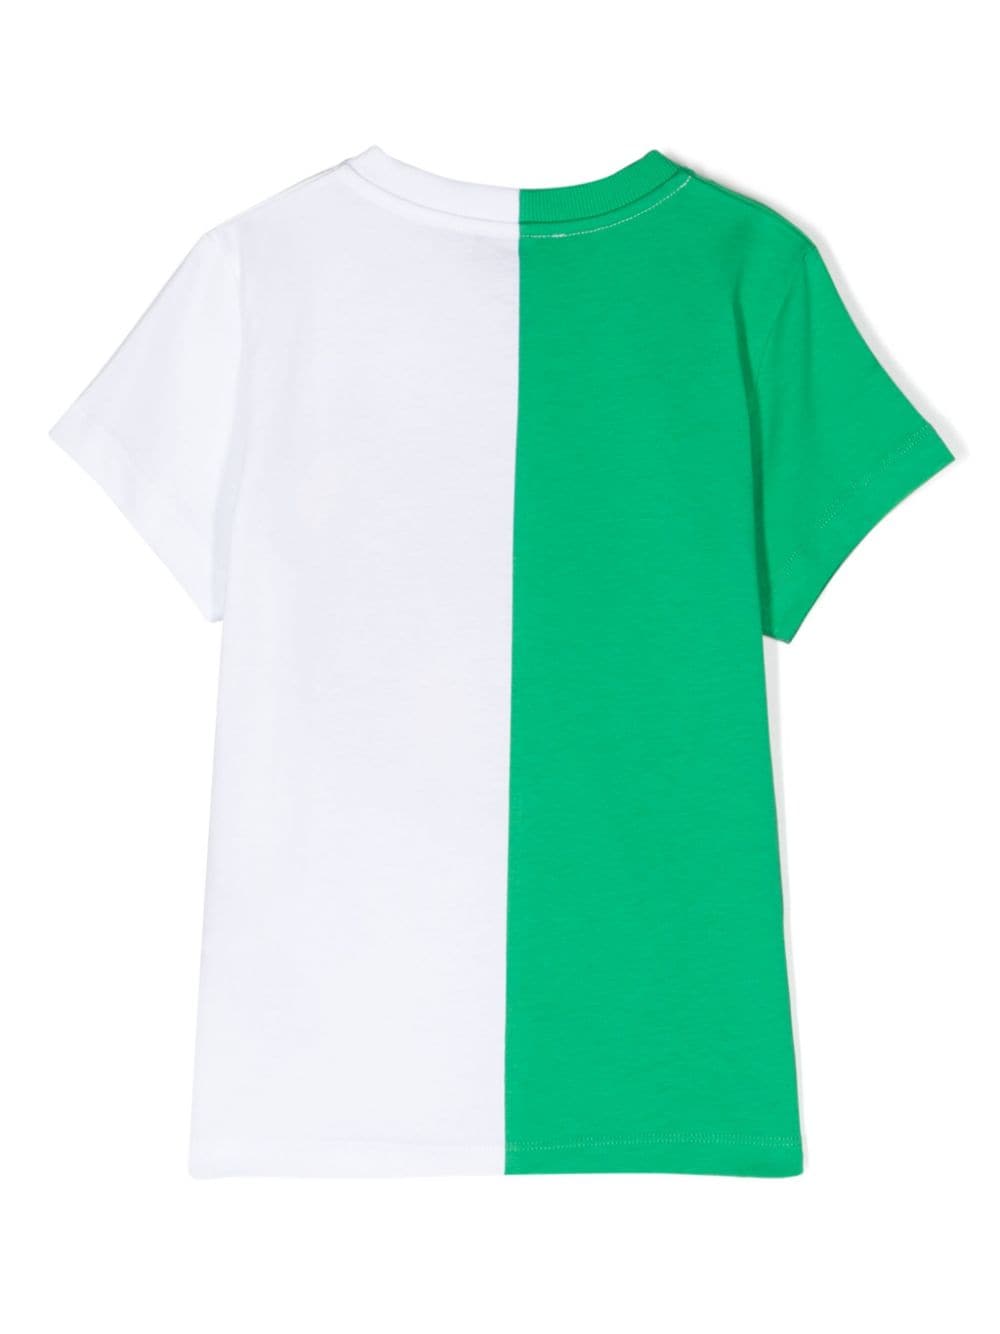 T-shirt bianca e verde per bambini con logo